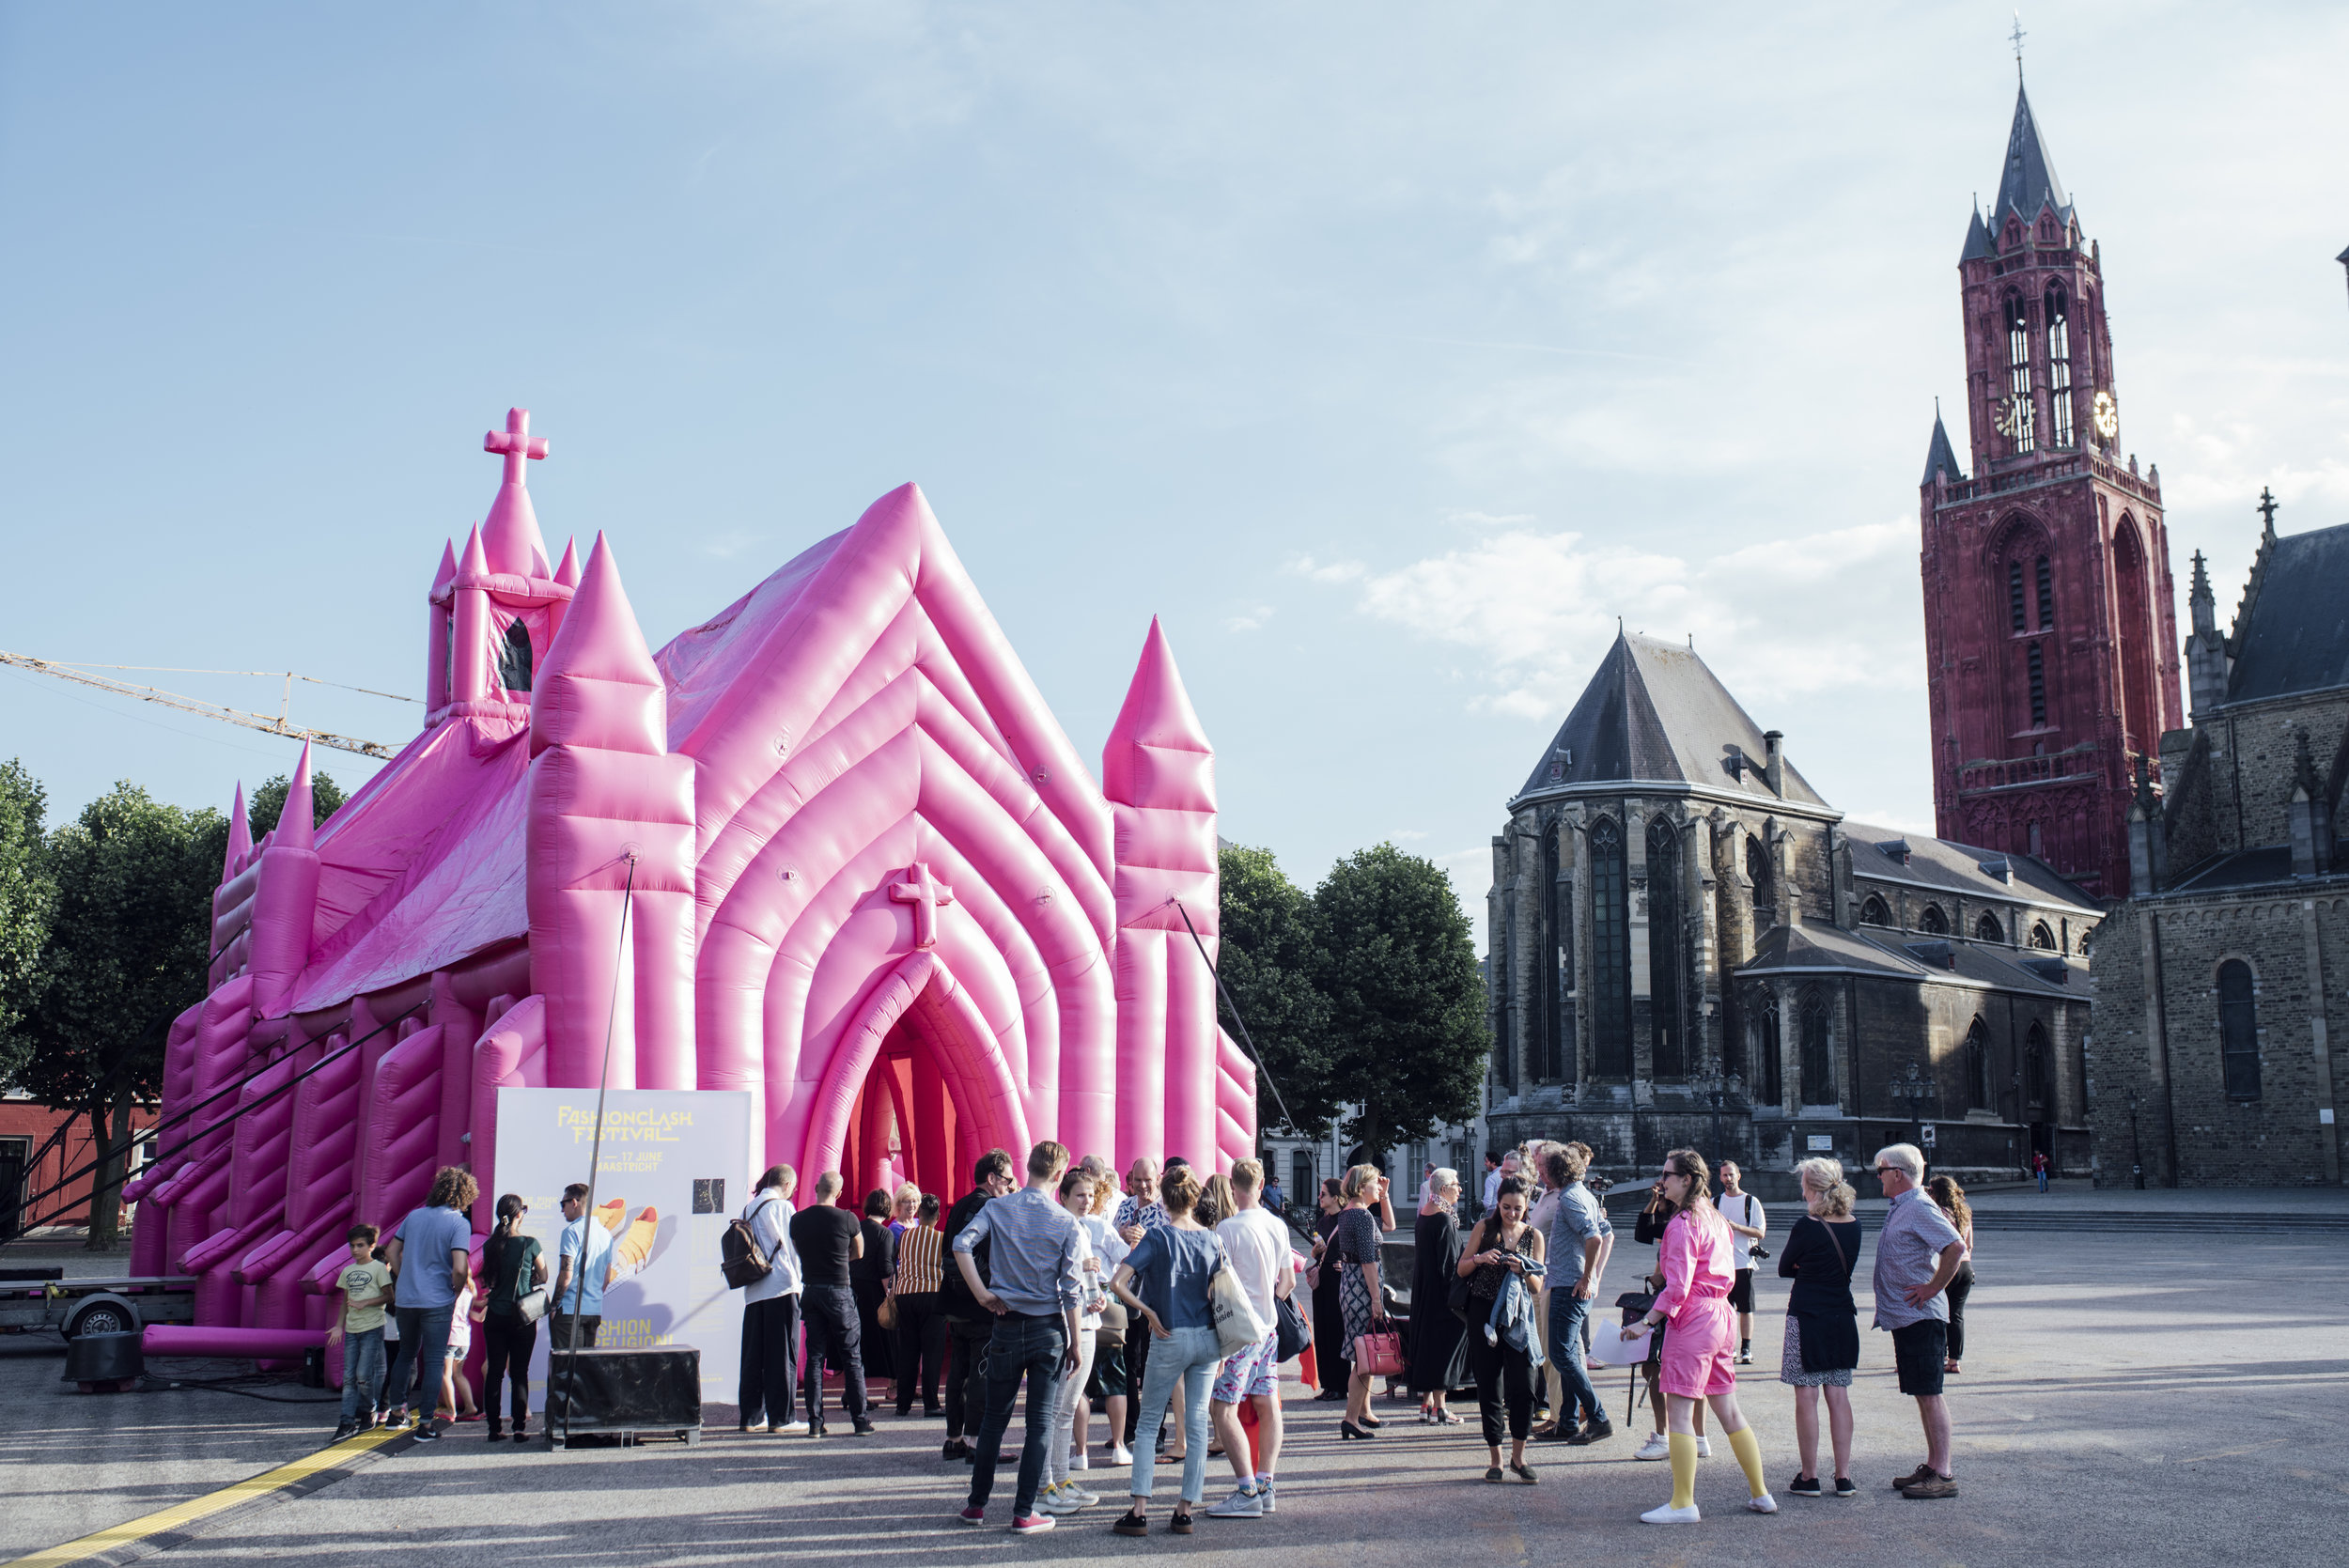 The Pink Church, by Waardengedreven_photo Ginger Bloemen_1.jpg